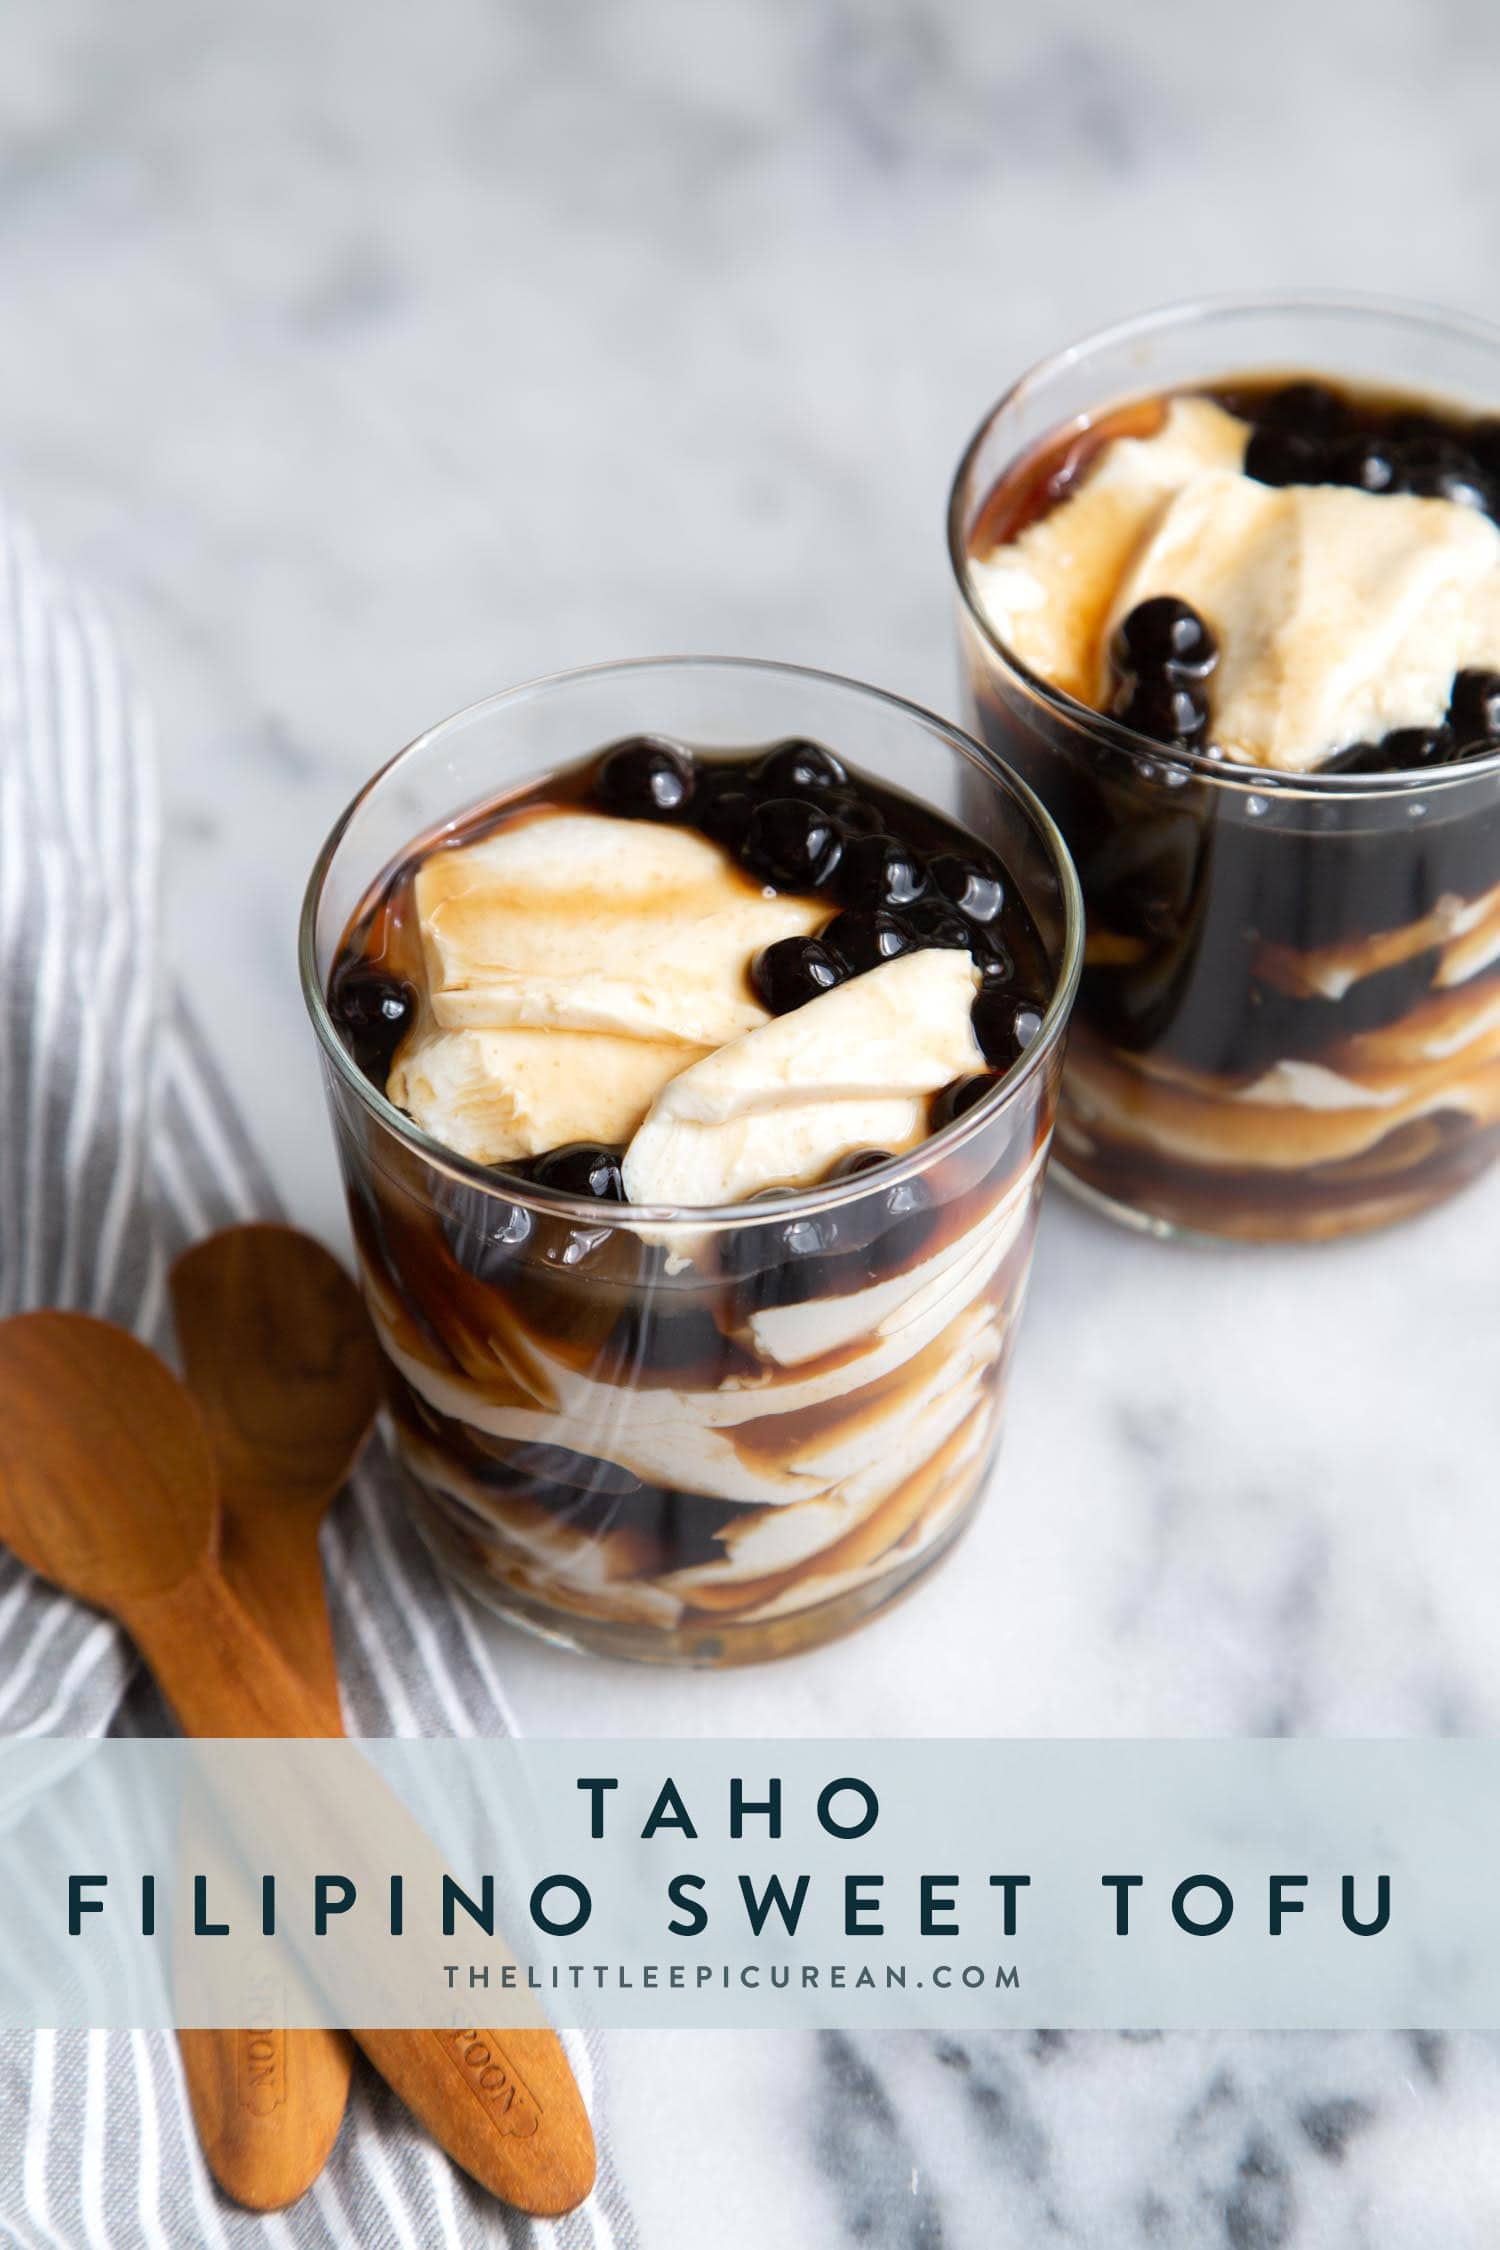 Taho (Filipino Sweet Tofu) - The Little Epicurean